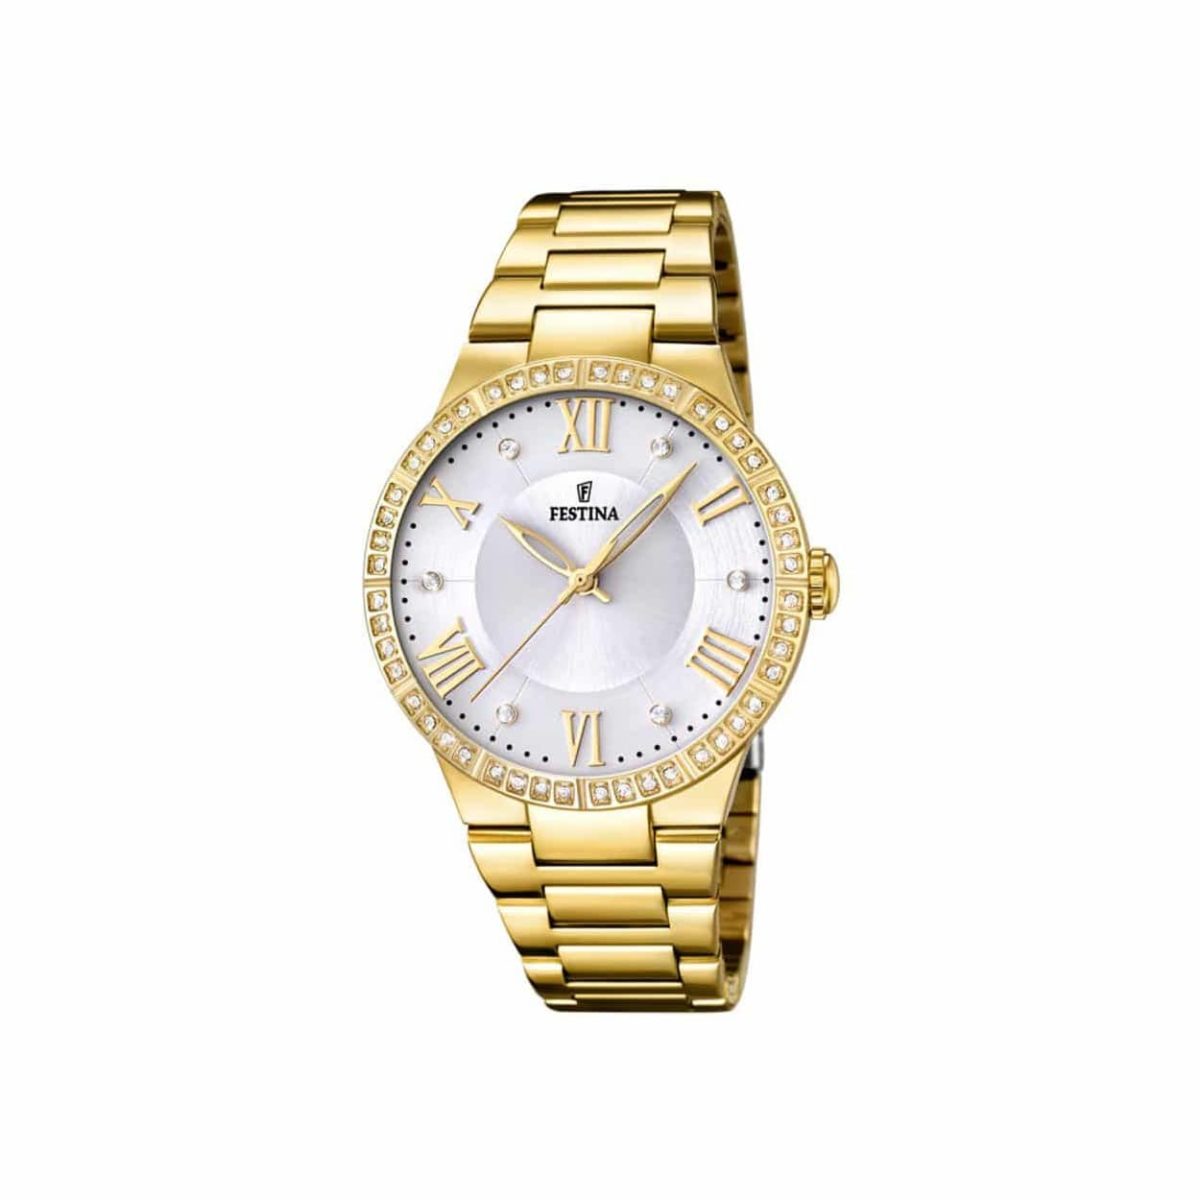 Festina Crystals Gold Women's Watch - F16720/1